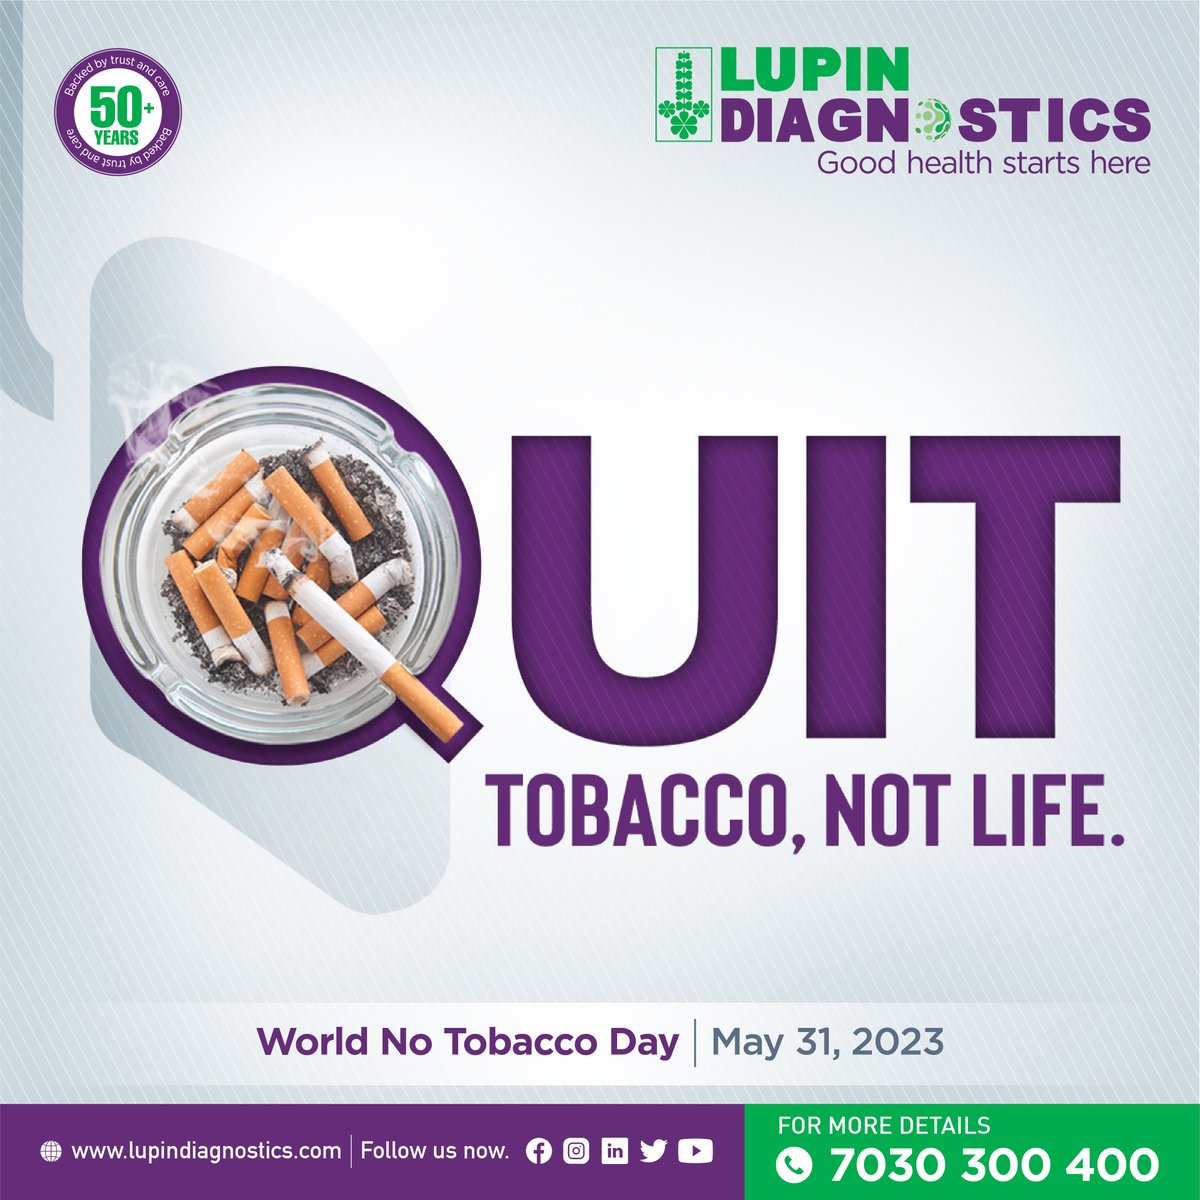 World No Tobacco Day

.
.
.
#WorldNoTobaccoDay #lupindiagnostics #goodhealthstartshere #diagnostics #pathology #healthpackages #health #healthcare #tobaccoawareness #worldnotobaccoday2023